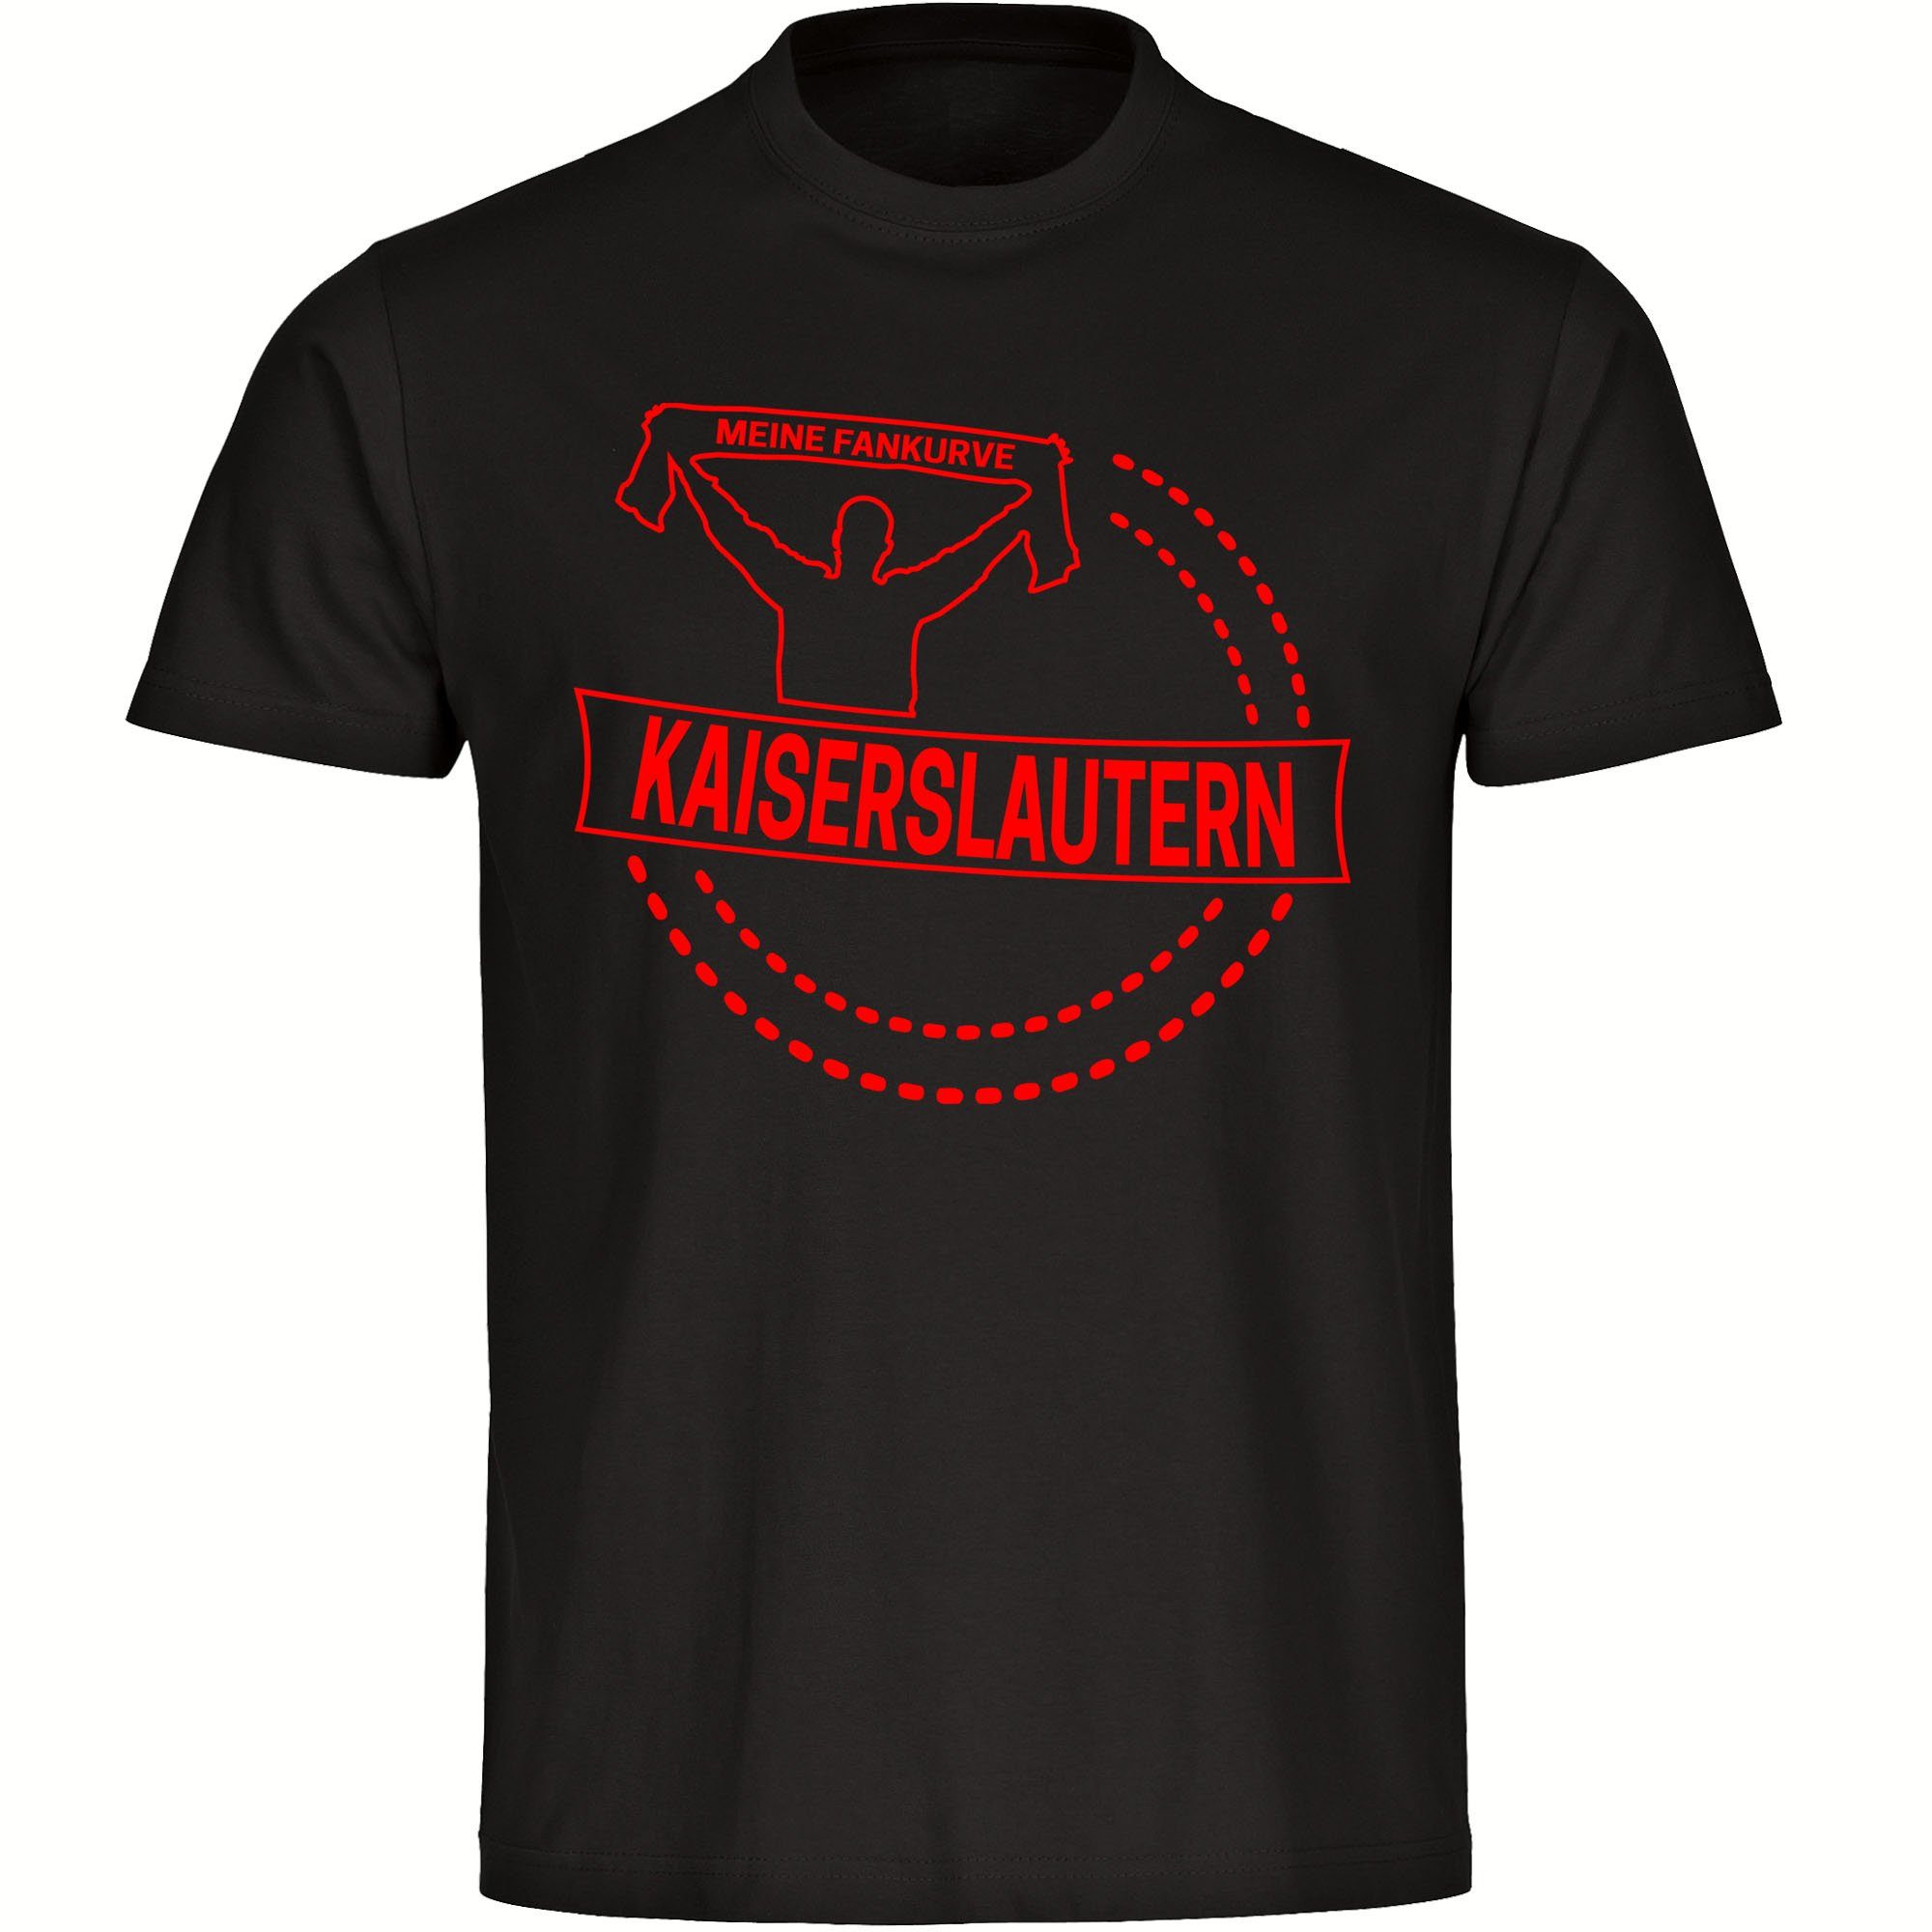 multifanshop T-Shirt Kinder Kaiserslautern - Meine Fankurve - Boy Girl